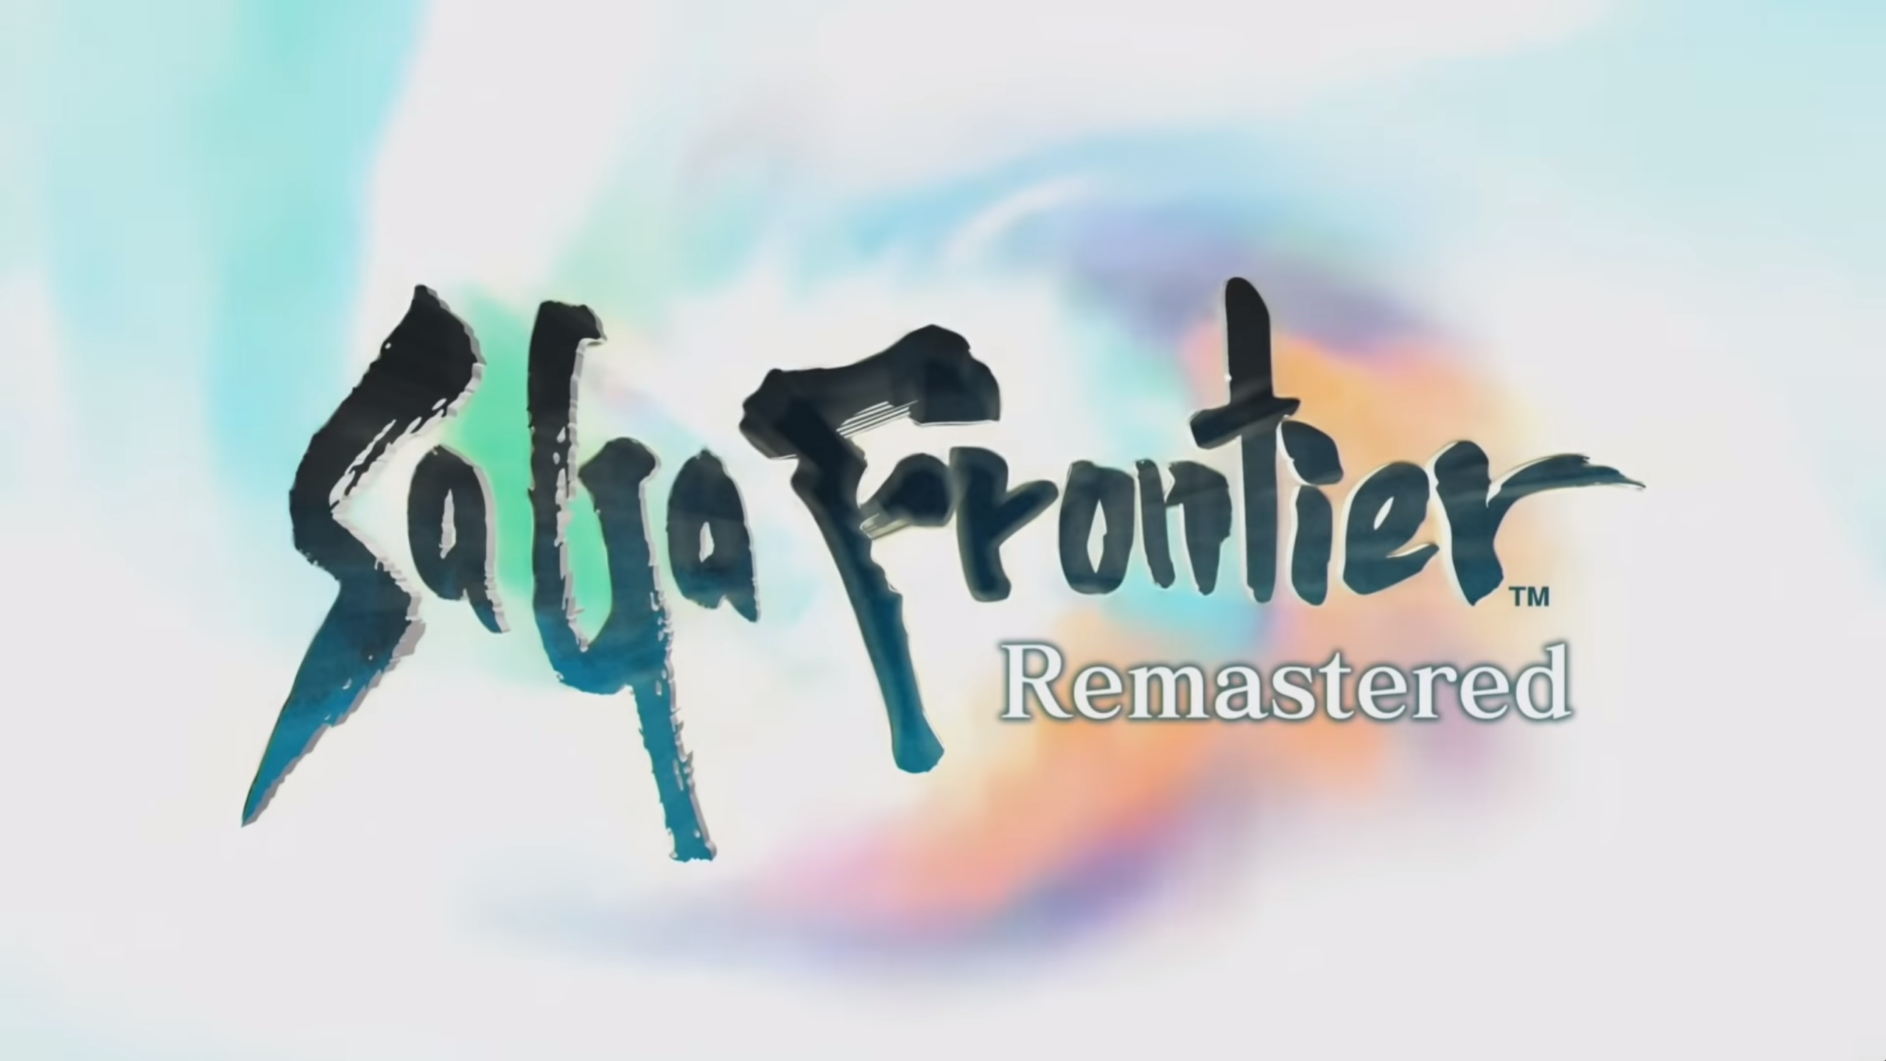 SaGa-Frontier-Remastered (1)